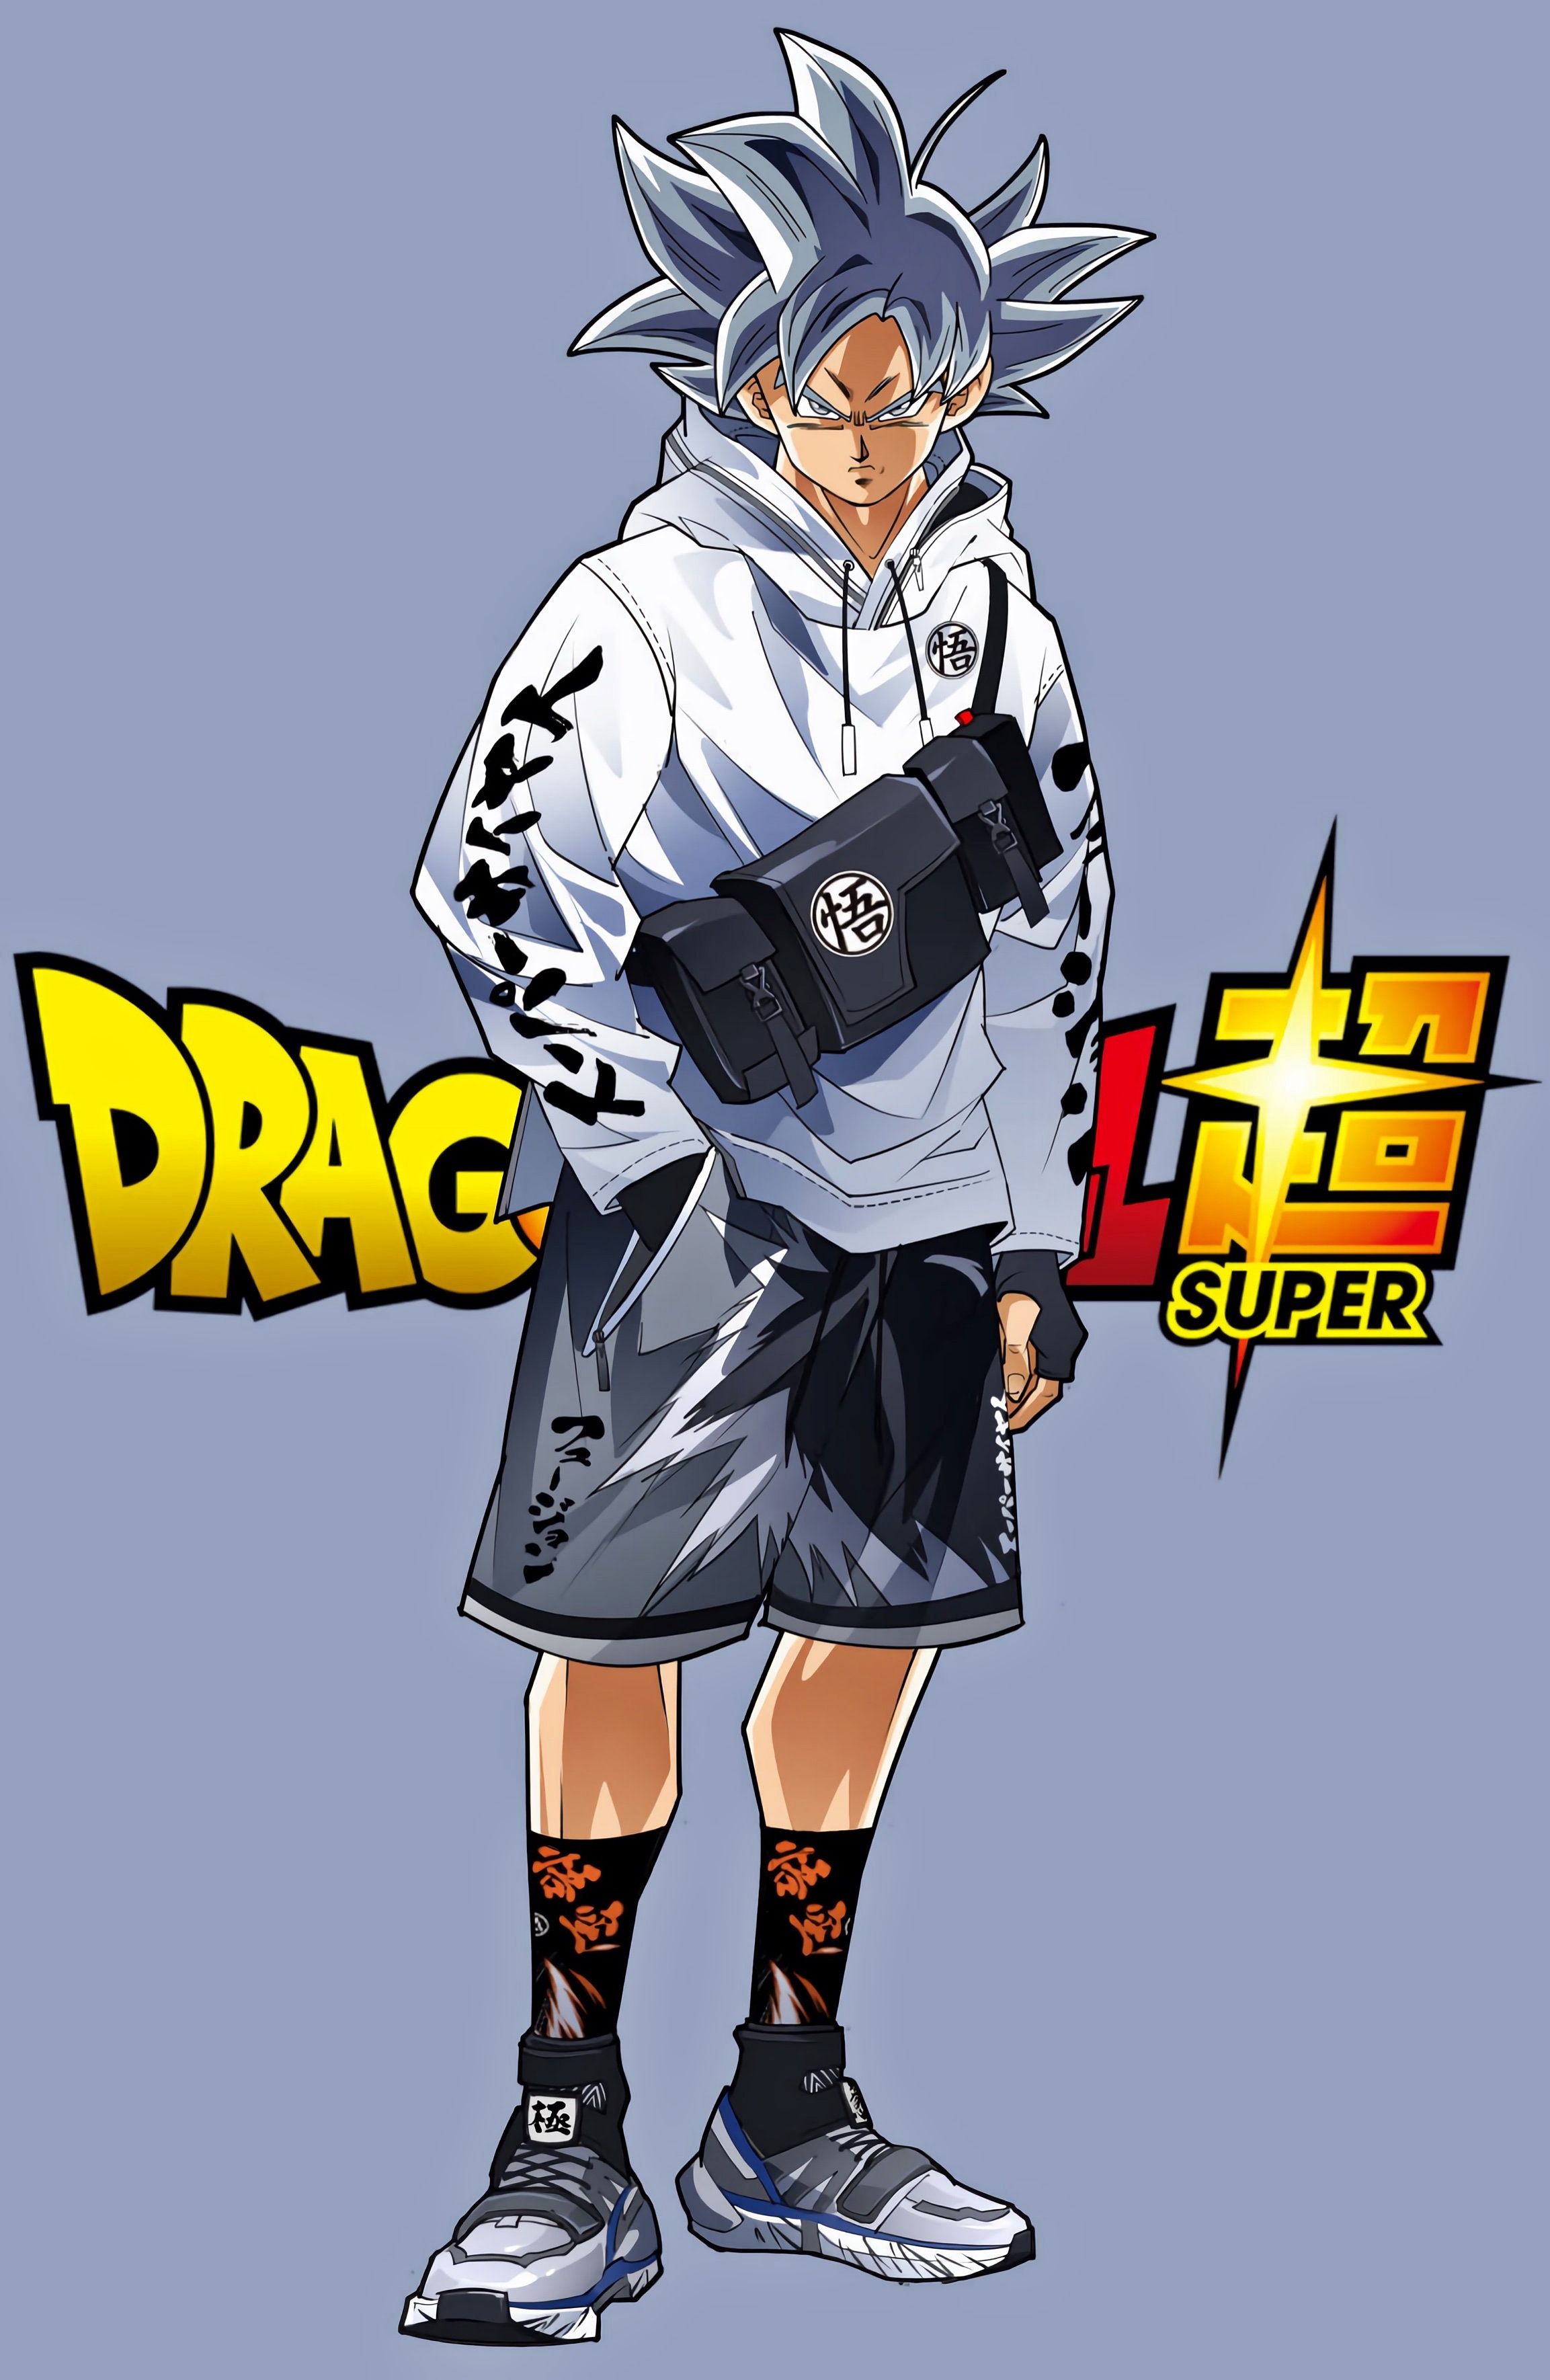 Drip Goku + HUM/SYM fit – Xenoverse Mods